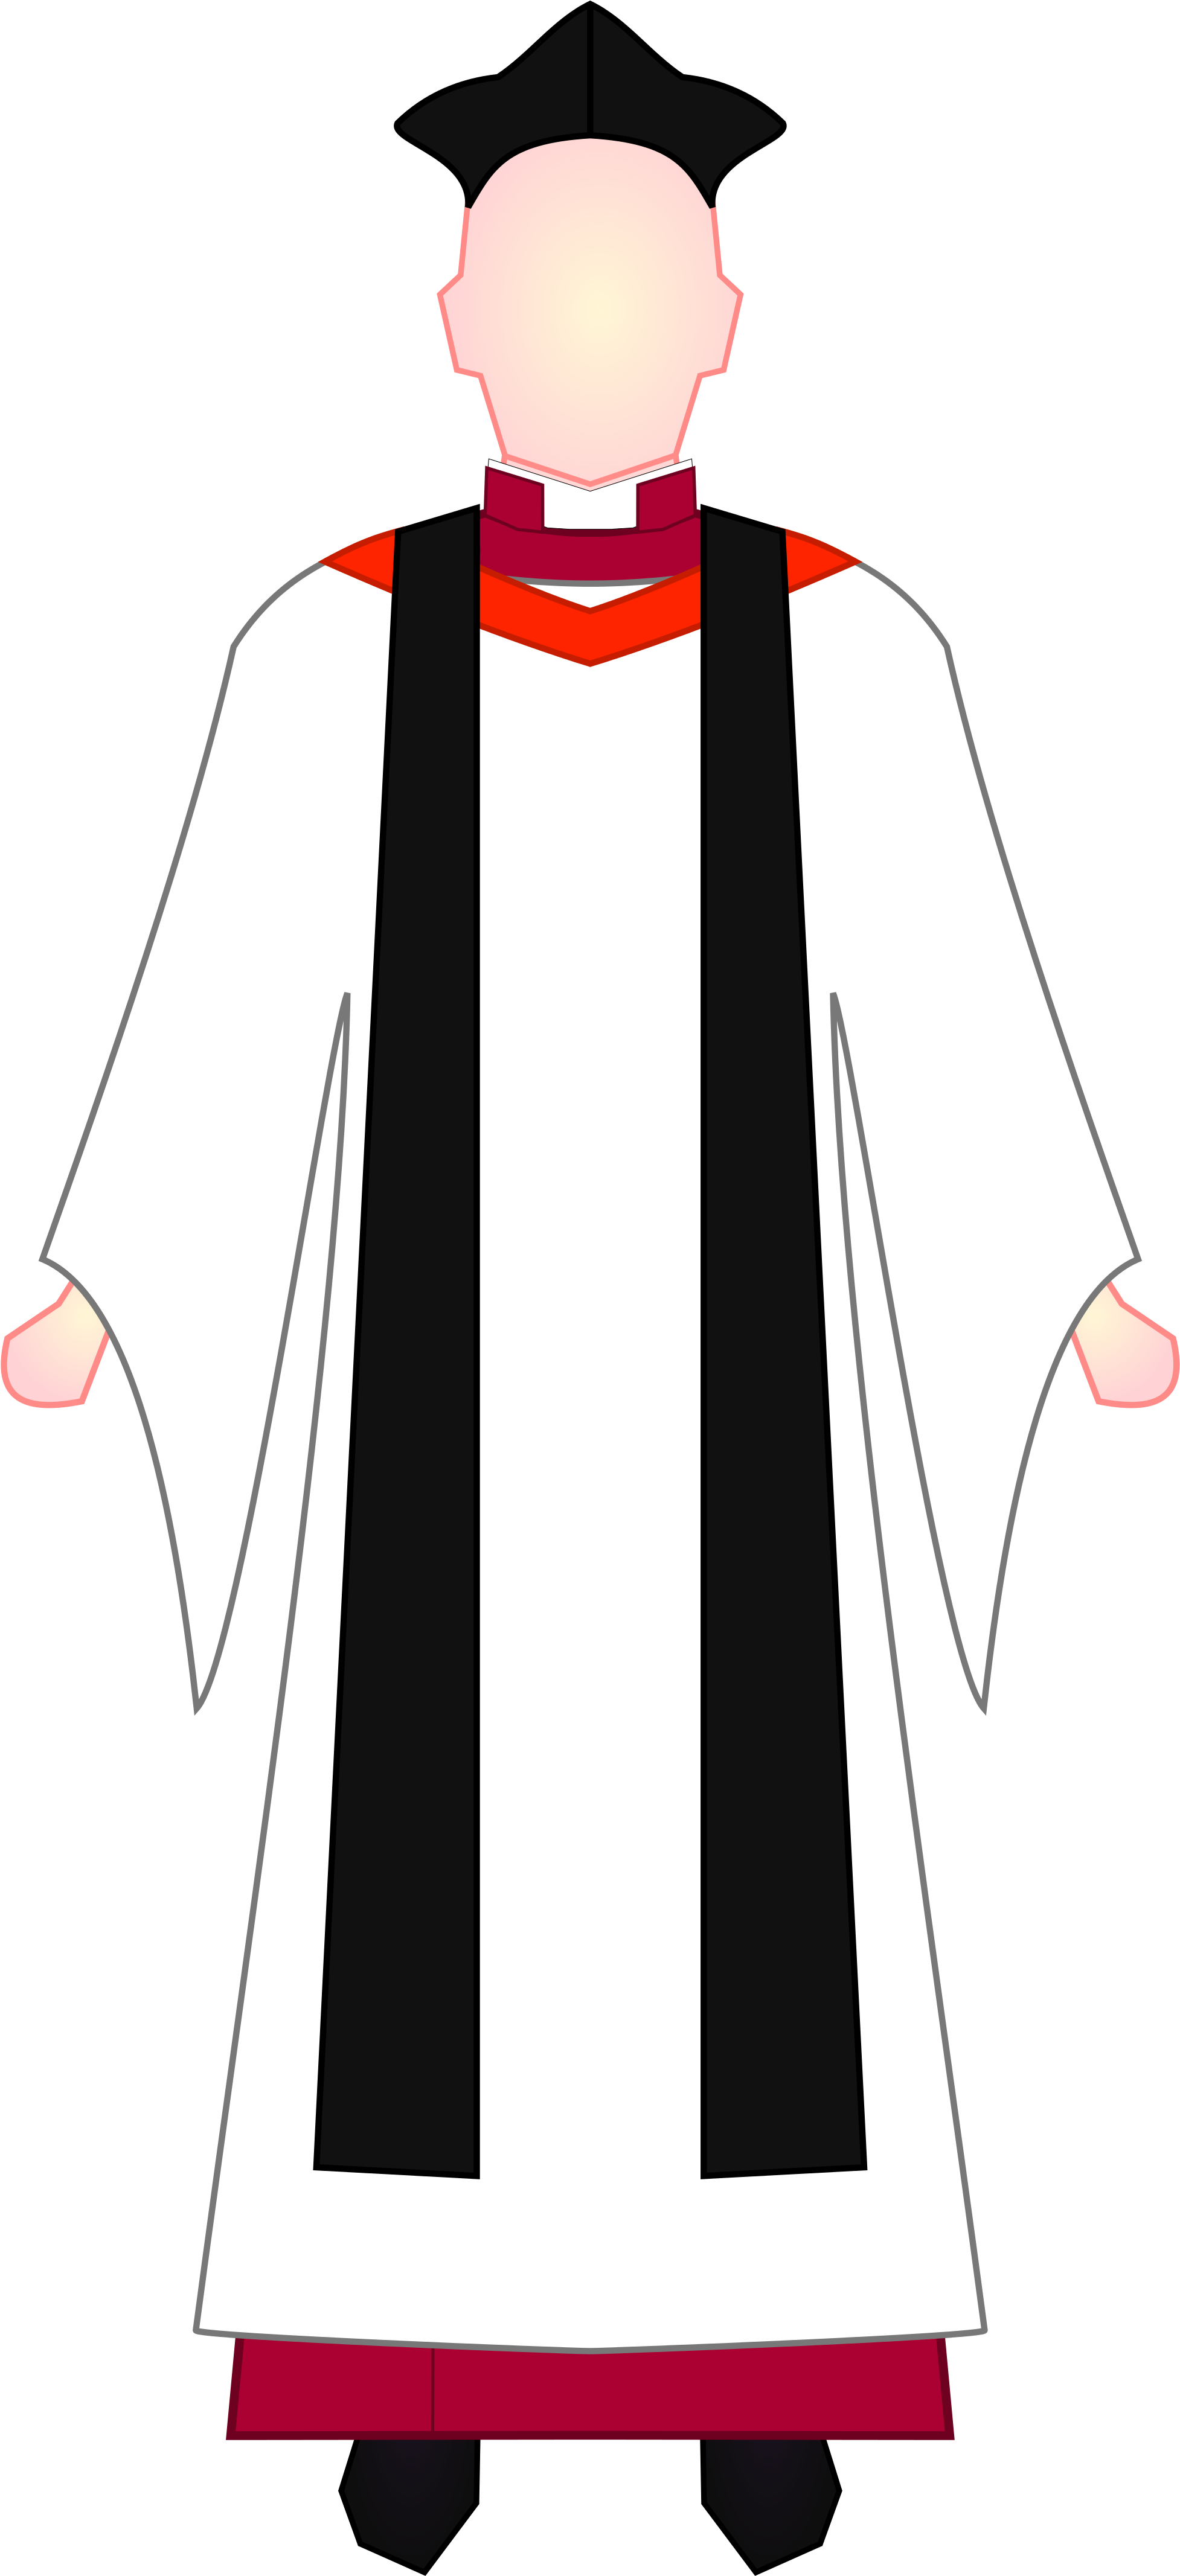 Open - Dress Of Priest (2000x4286)